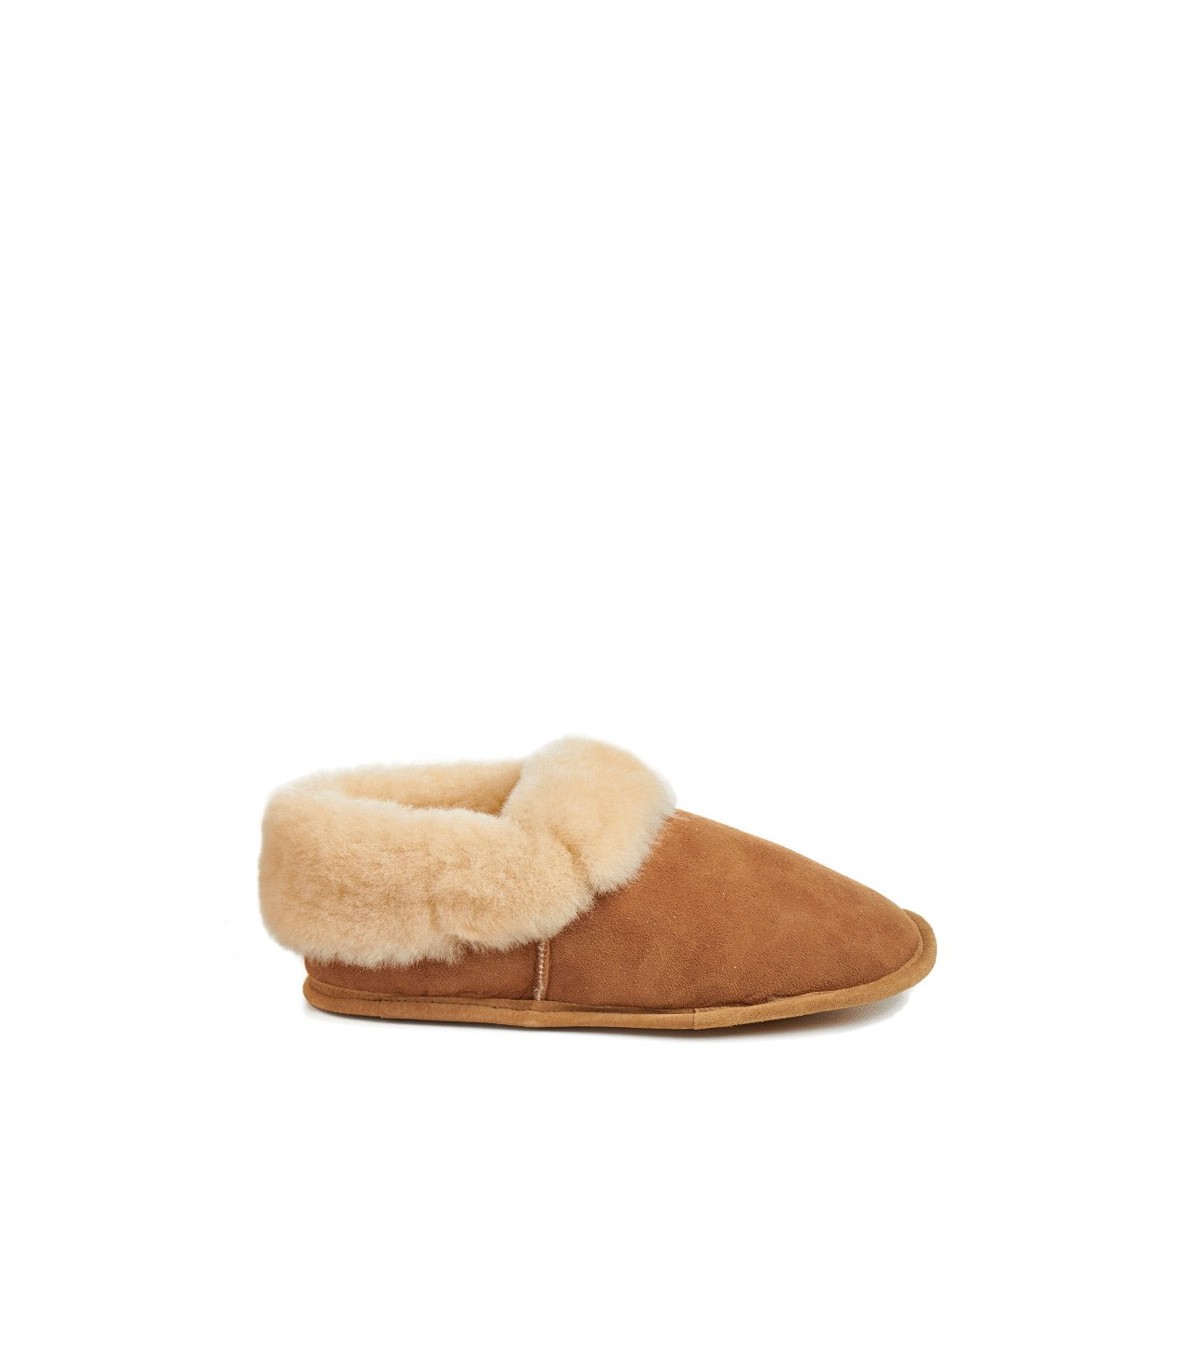 Men’s Luxury Brown Handmade Genuine Sheepskin Suede Fur Slippers EVA Sole New 